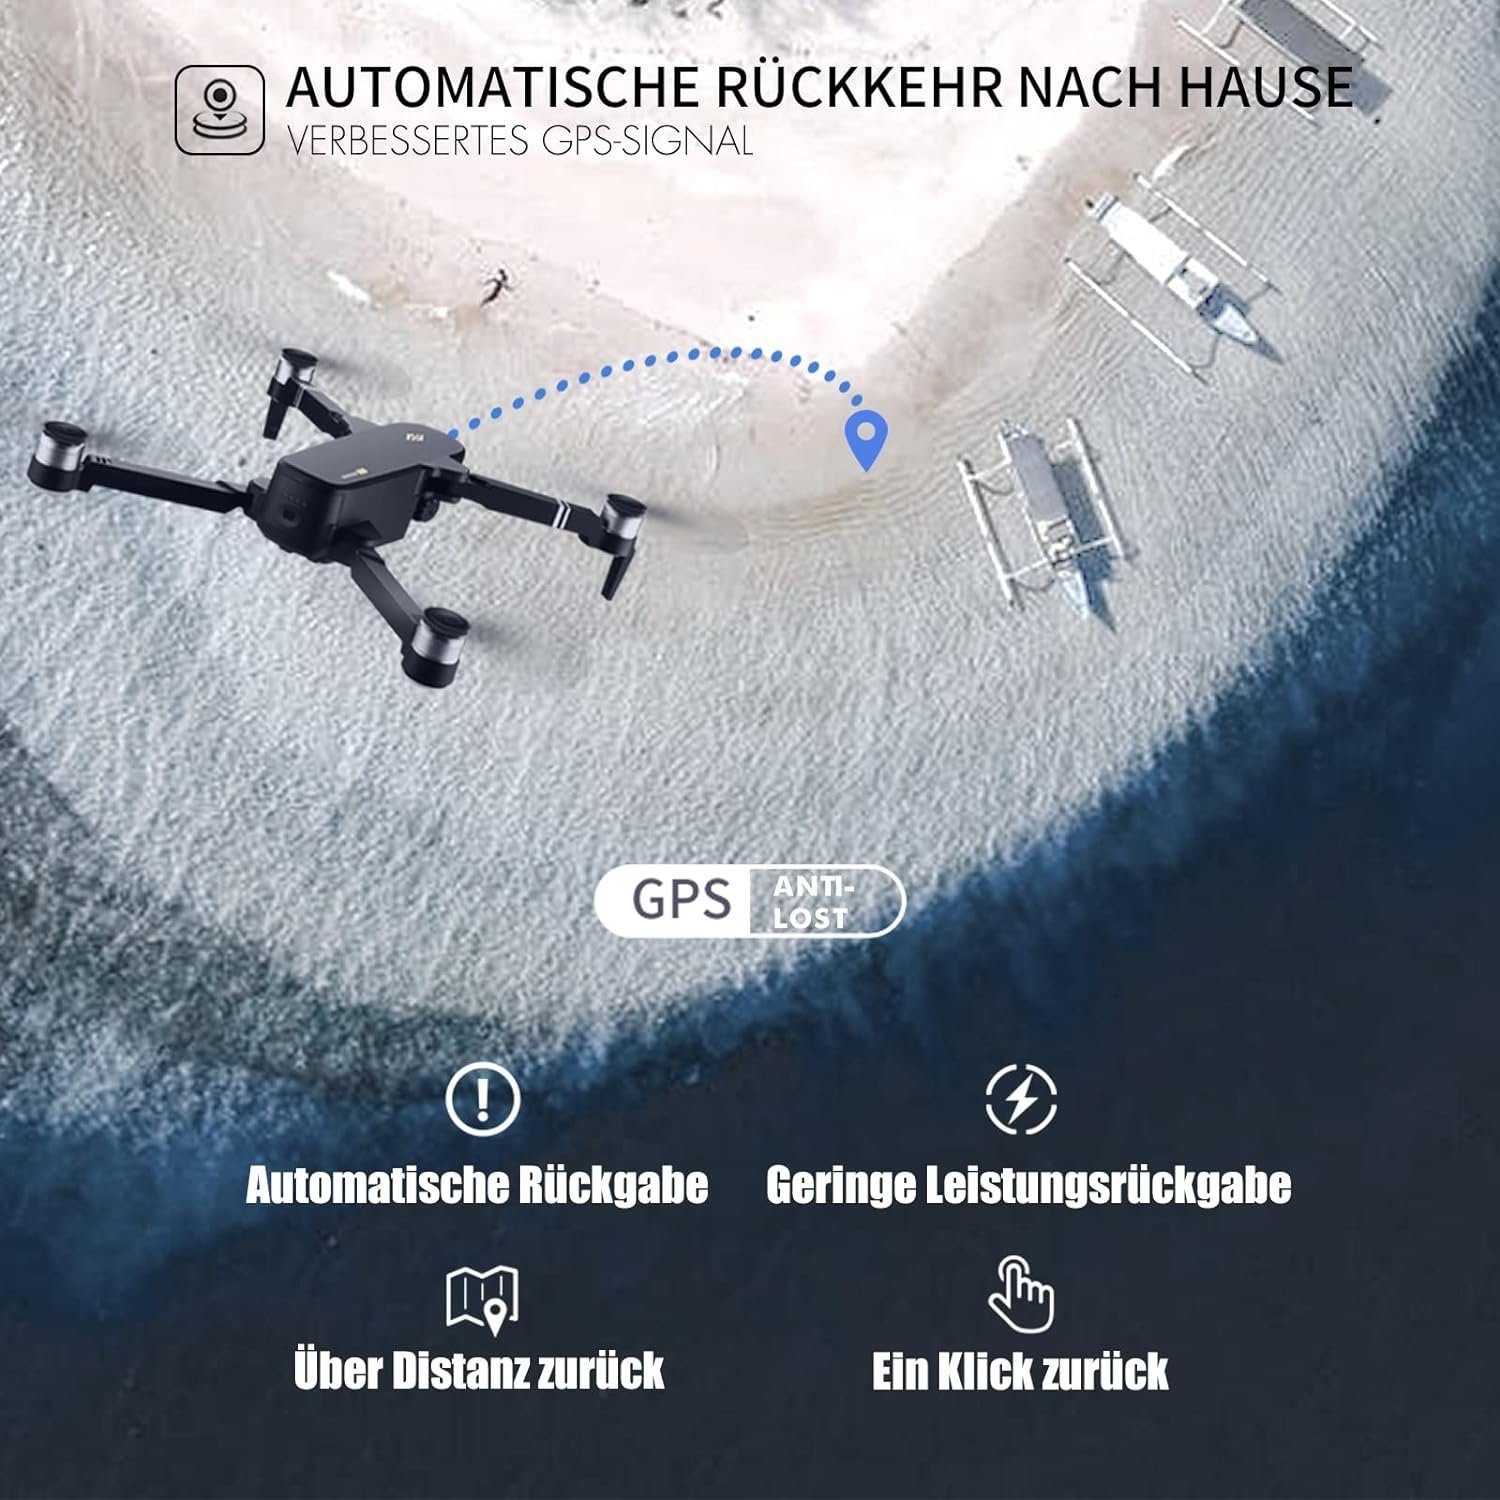 90+ Gimbal mit Drohnen Bürstenloser CHUBORY UHD, Anti-Wackel,Auto-Rückkehr mit Alle Min. Funktionen) Drohne X11 Pro Langflugzeit,3-Achsen (4K Motor GPS